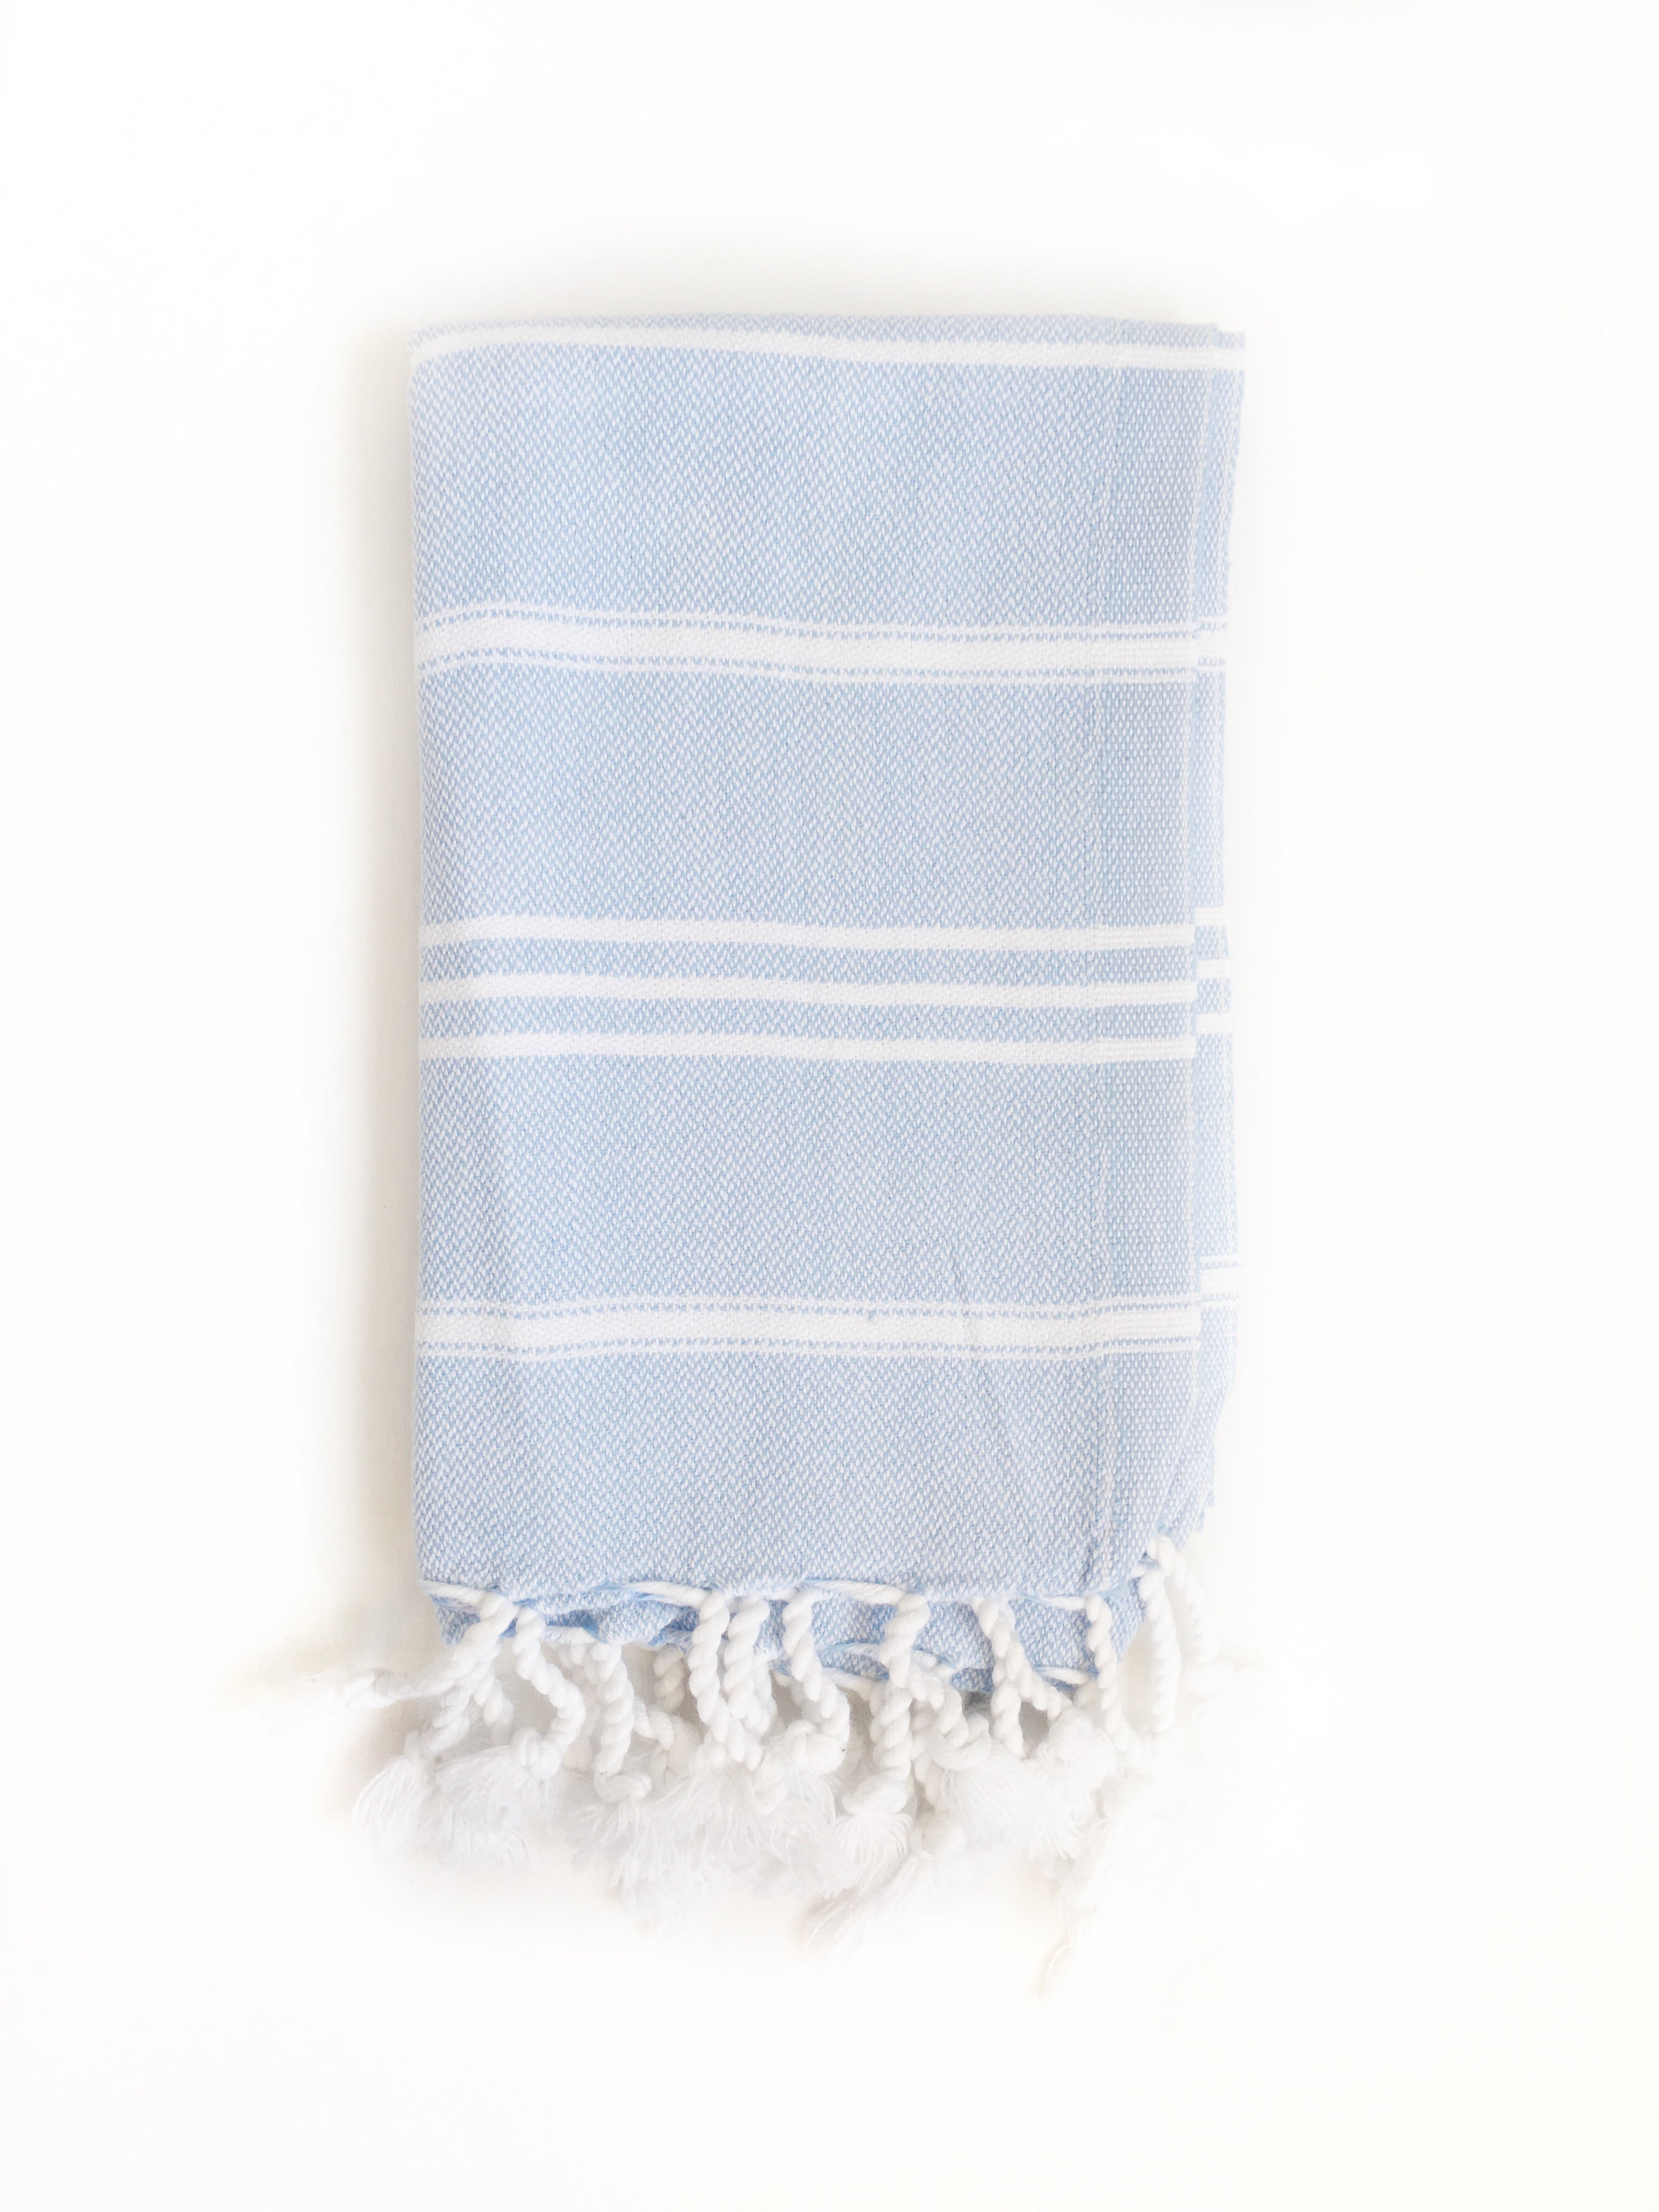 Light Blue/White Turkish Bath/Beach Towel